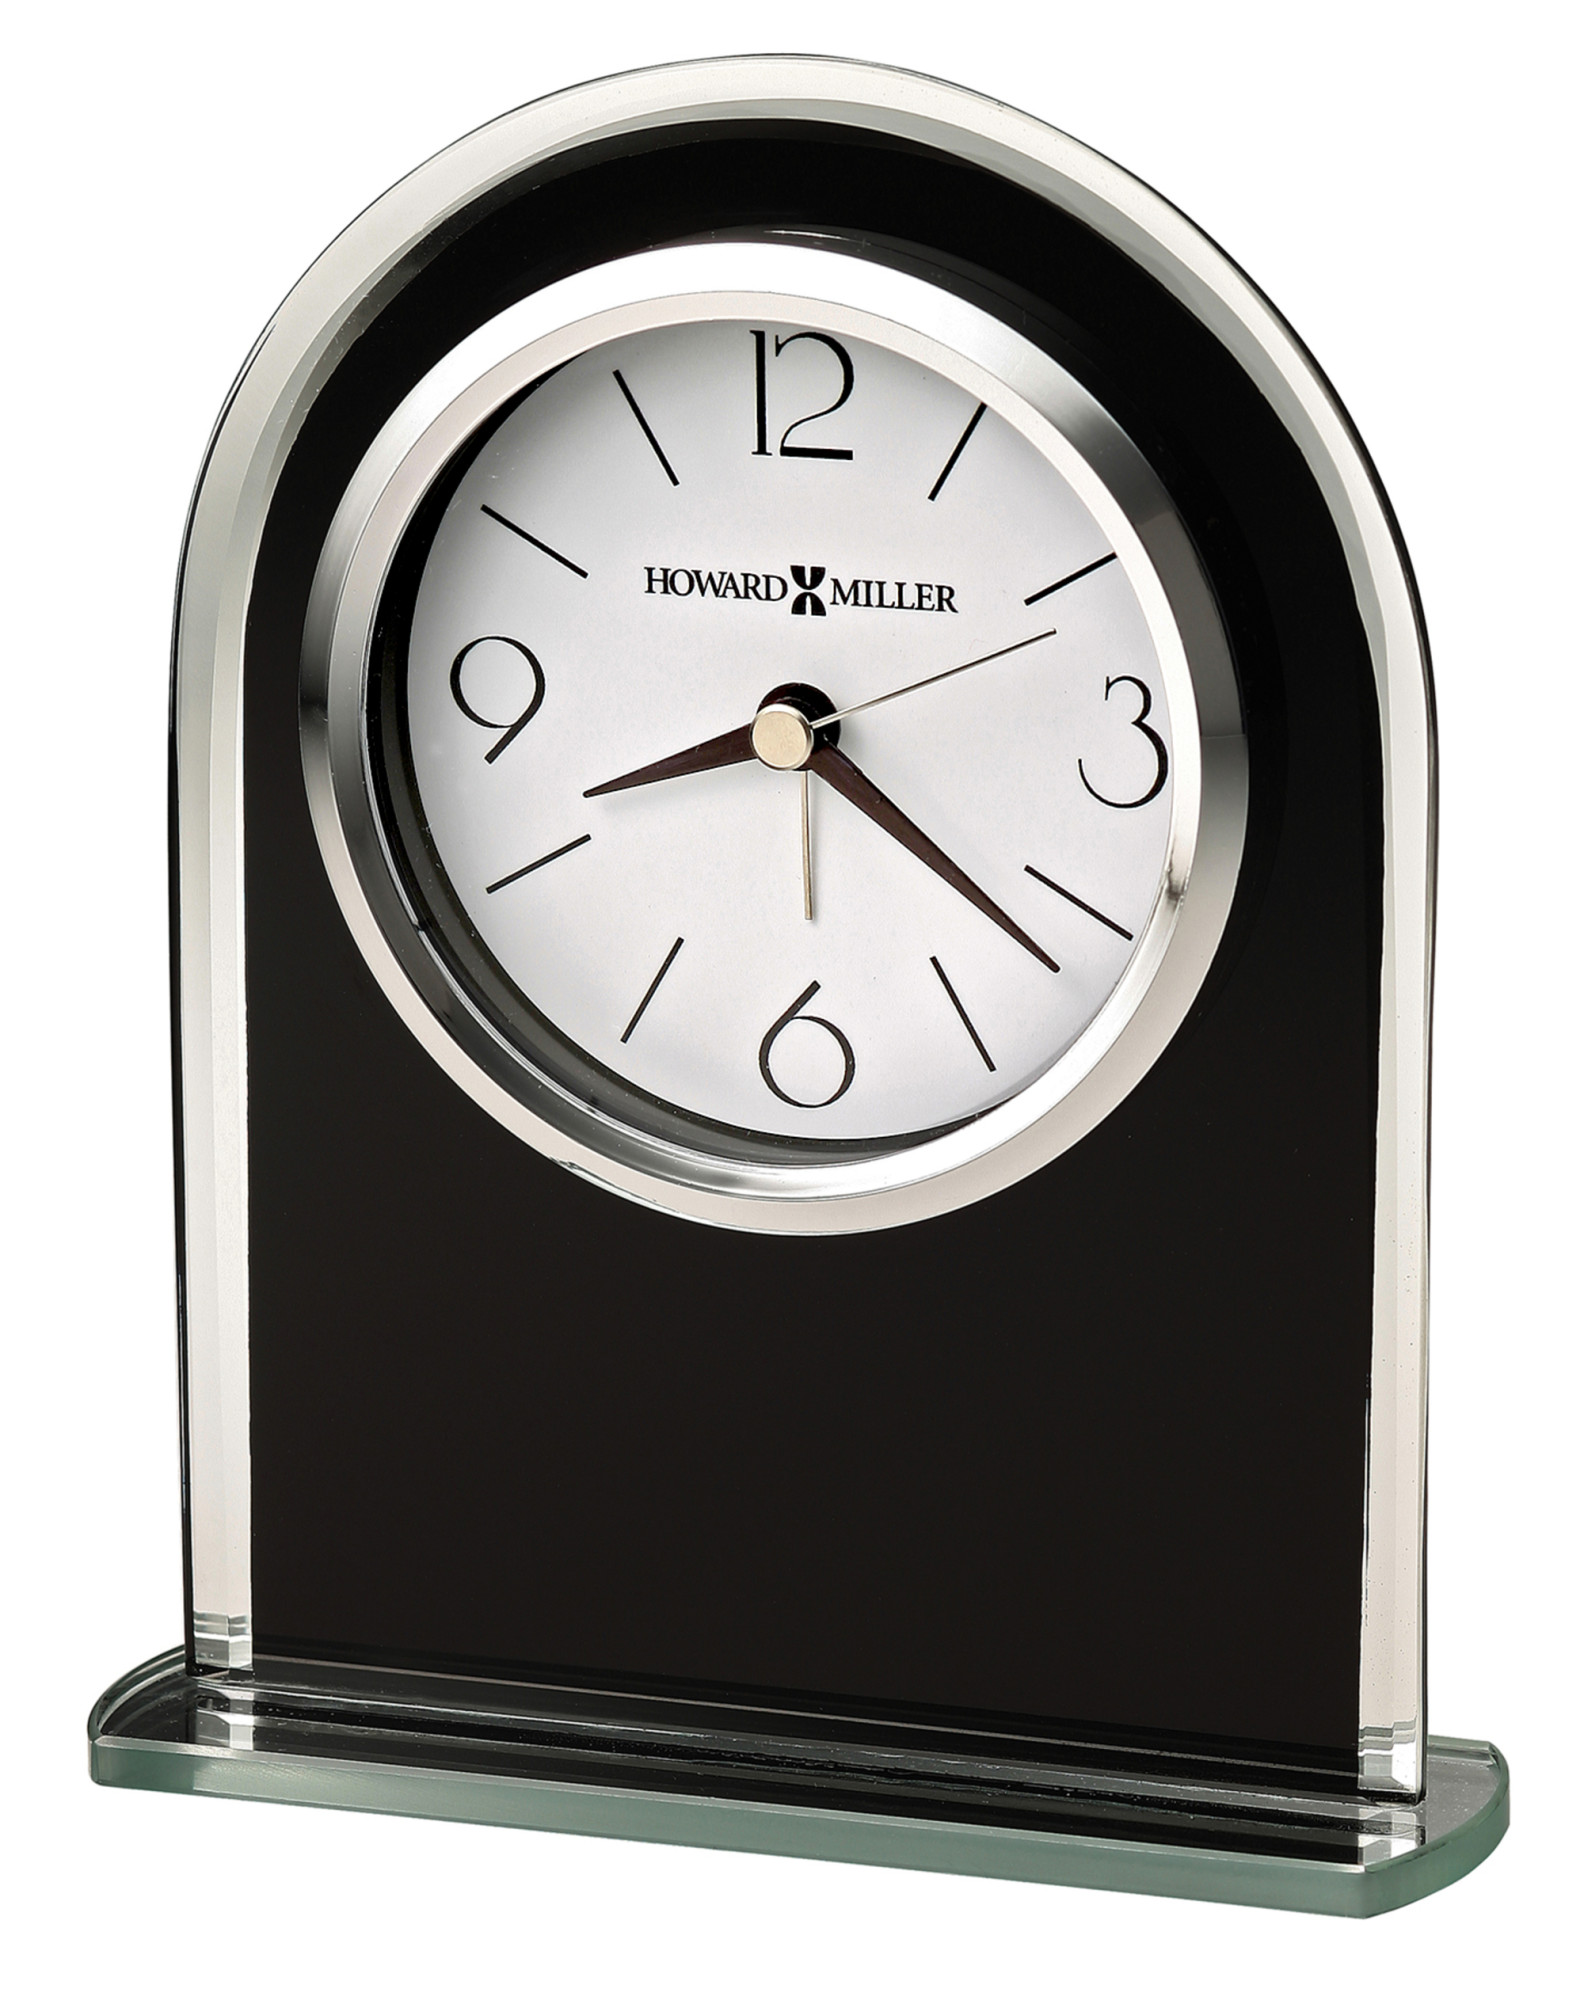 Howard Miller Ebony Luster Black and Silver Finish Quartz Alarm Clock #Q-GM7431 - image 1 of 3